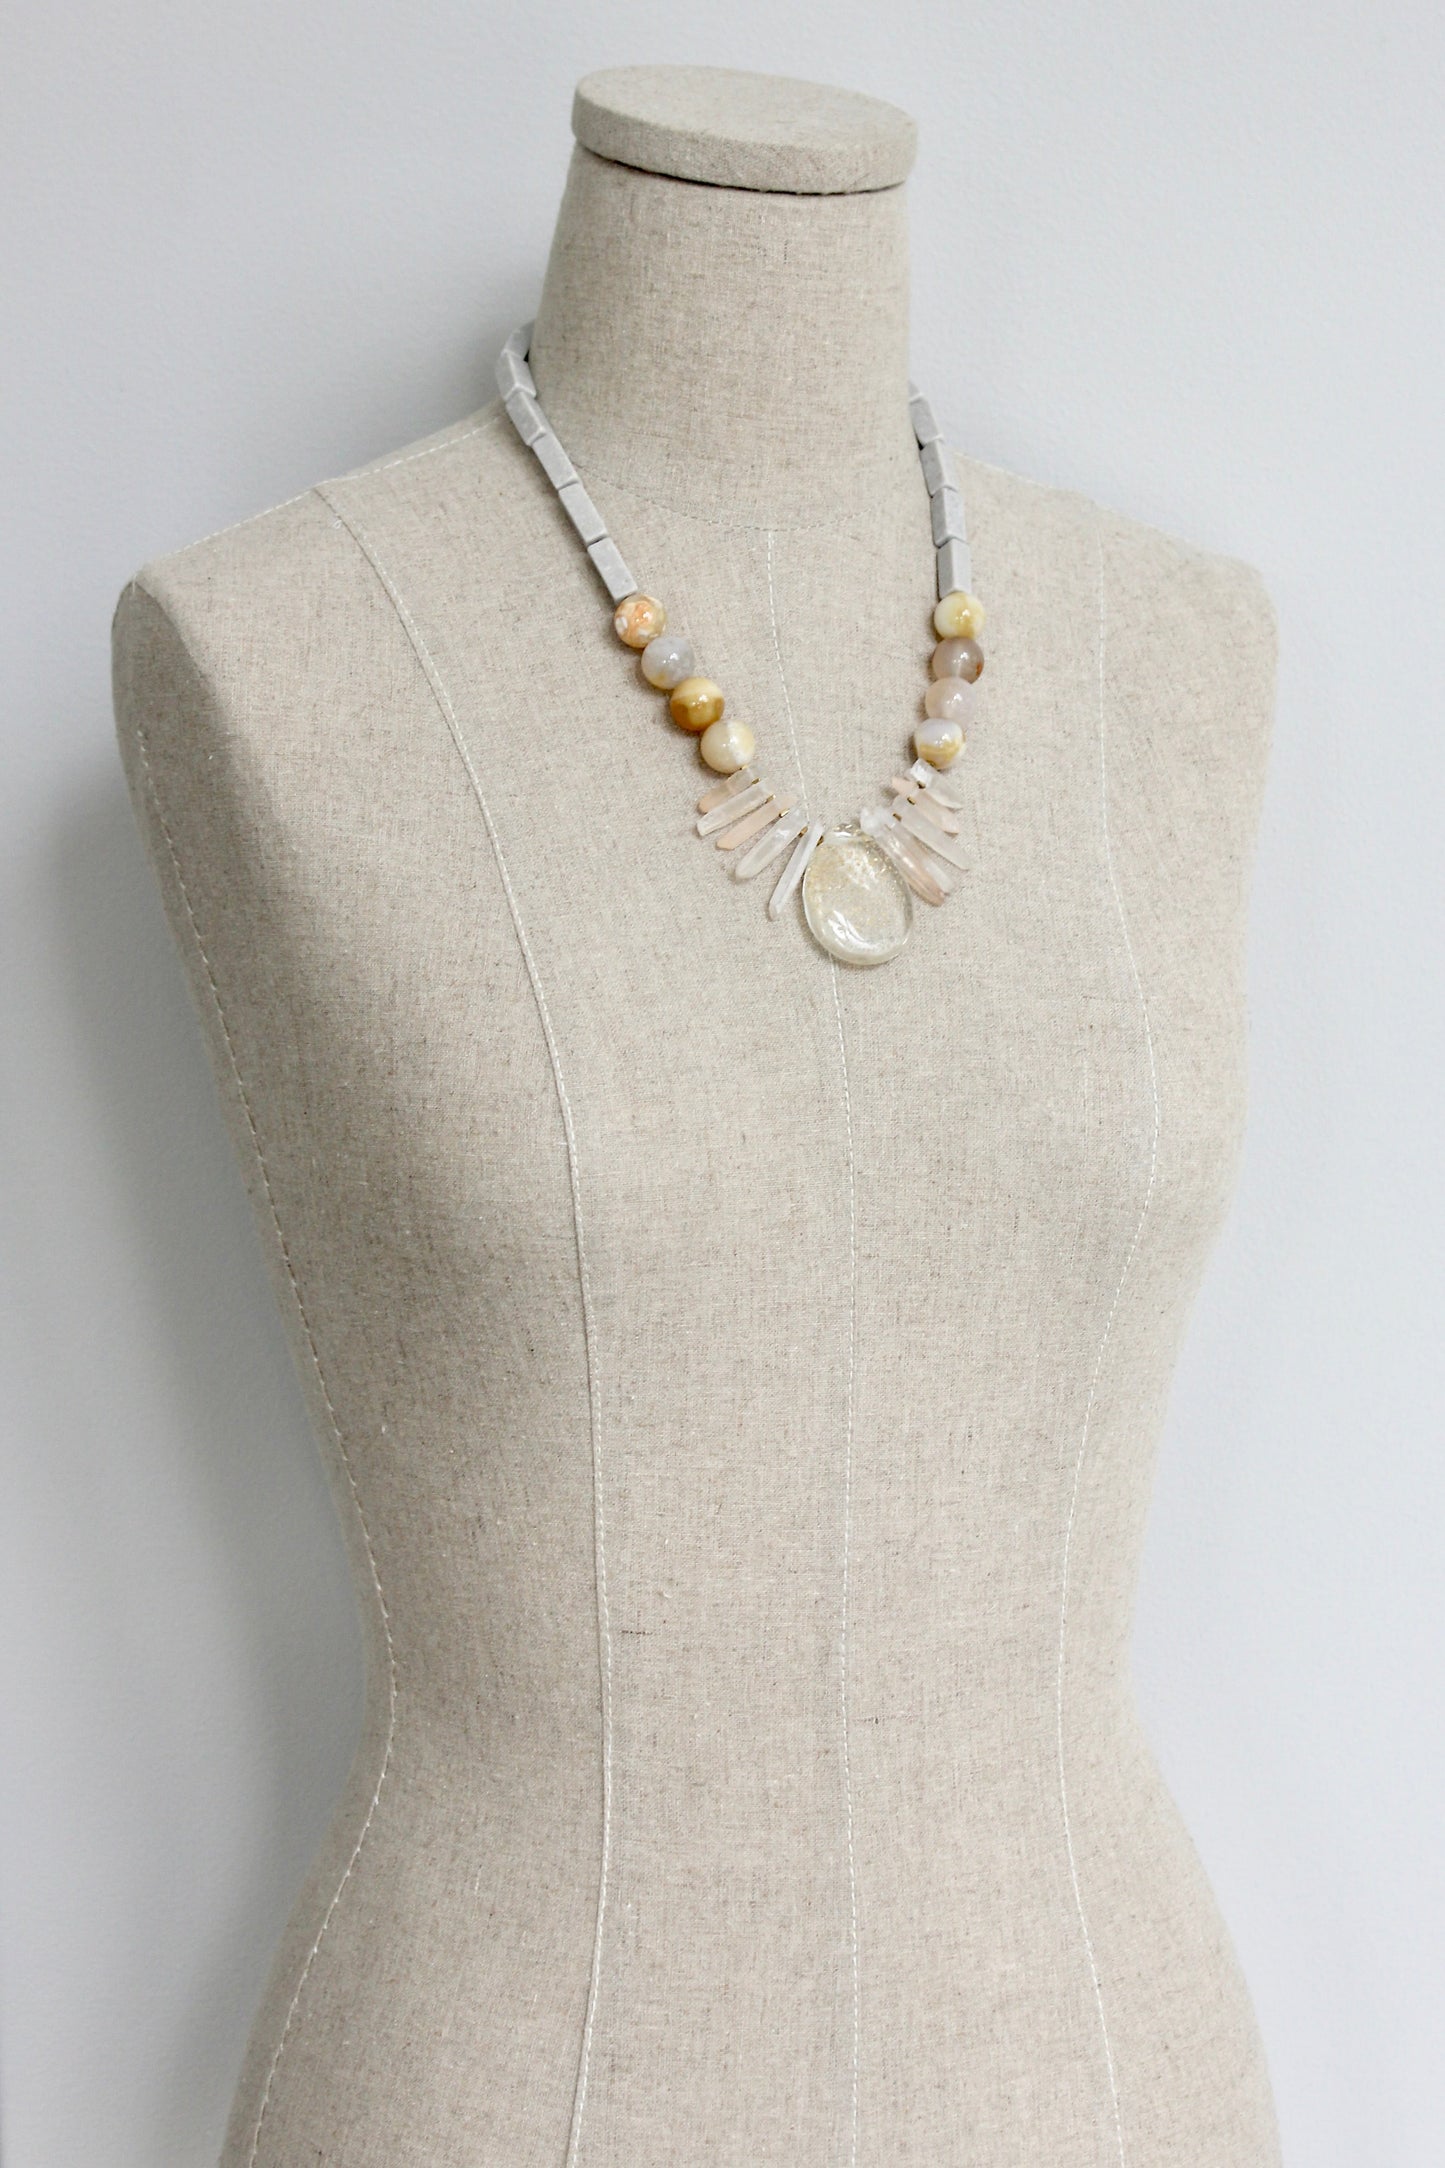 ISL4020 Quartz and yellow agate pendant necklace